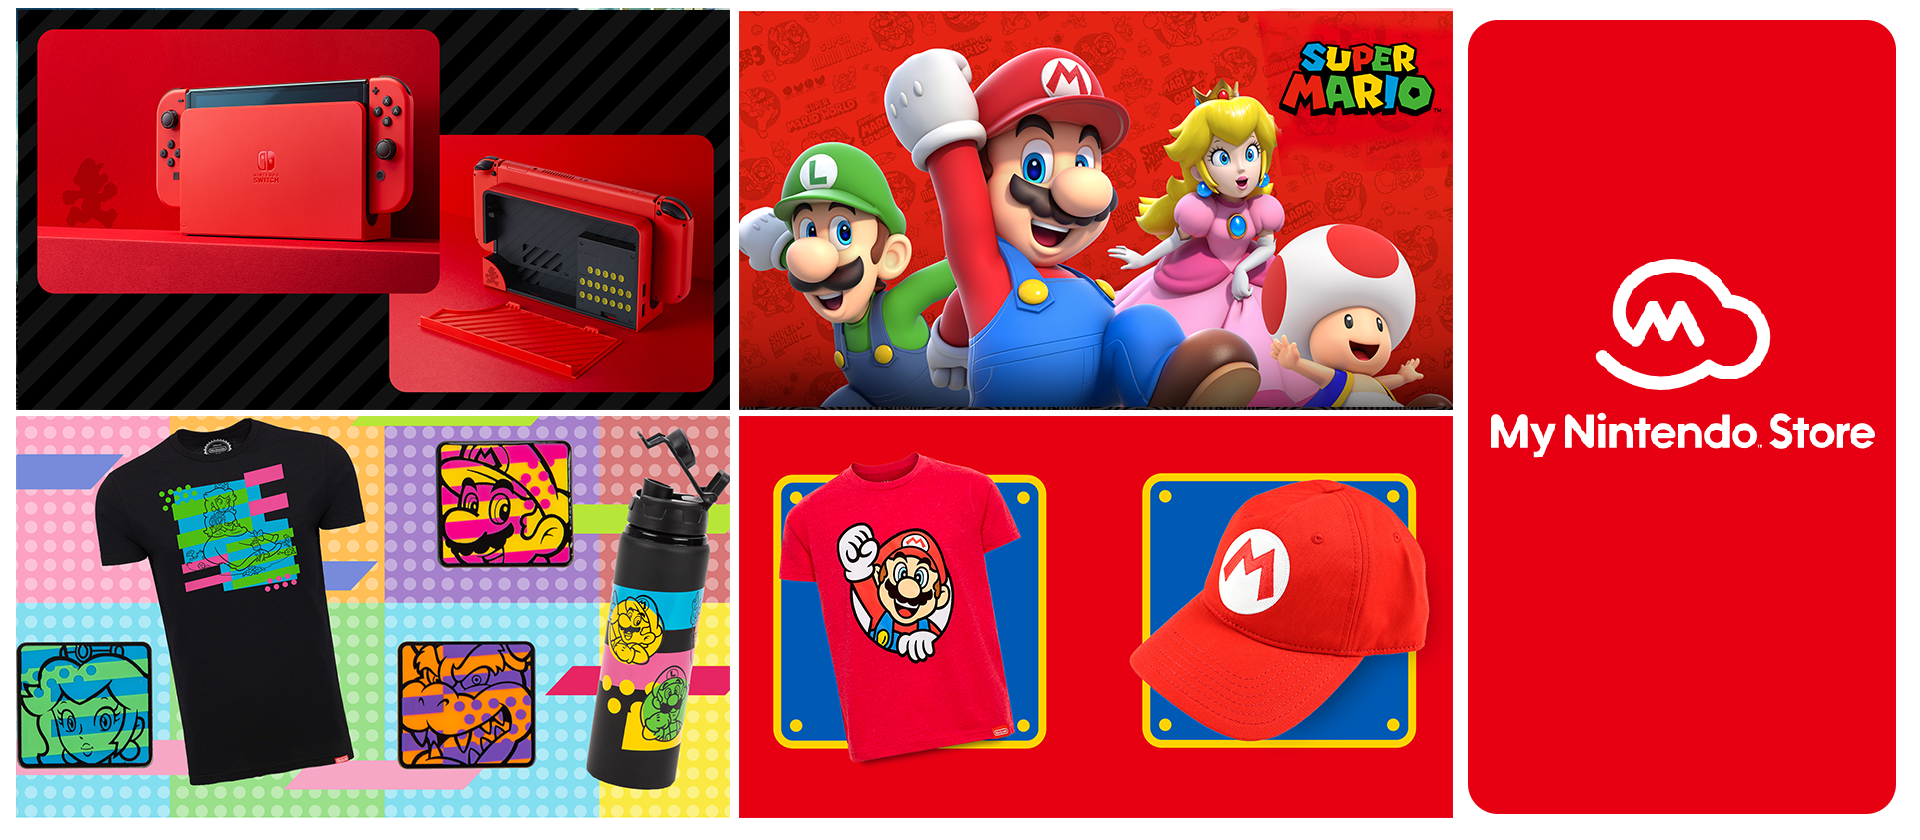 Mario Wonder's physical My Nintendo reward is a double keychain